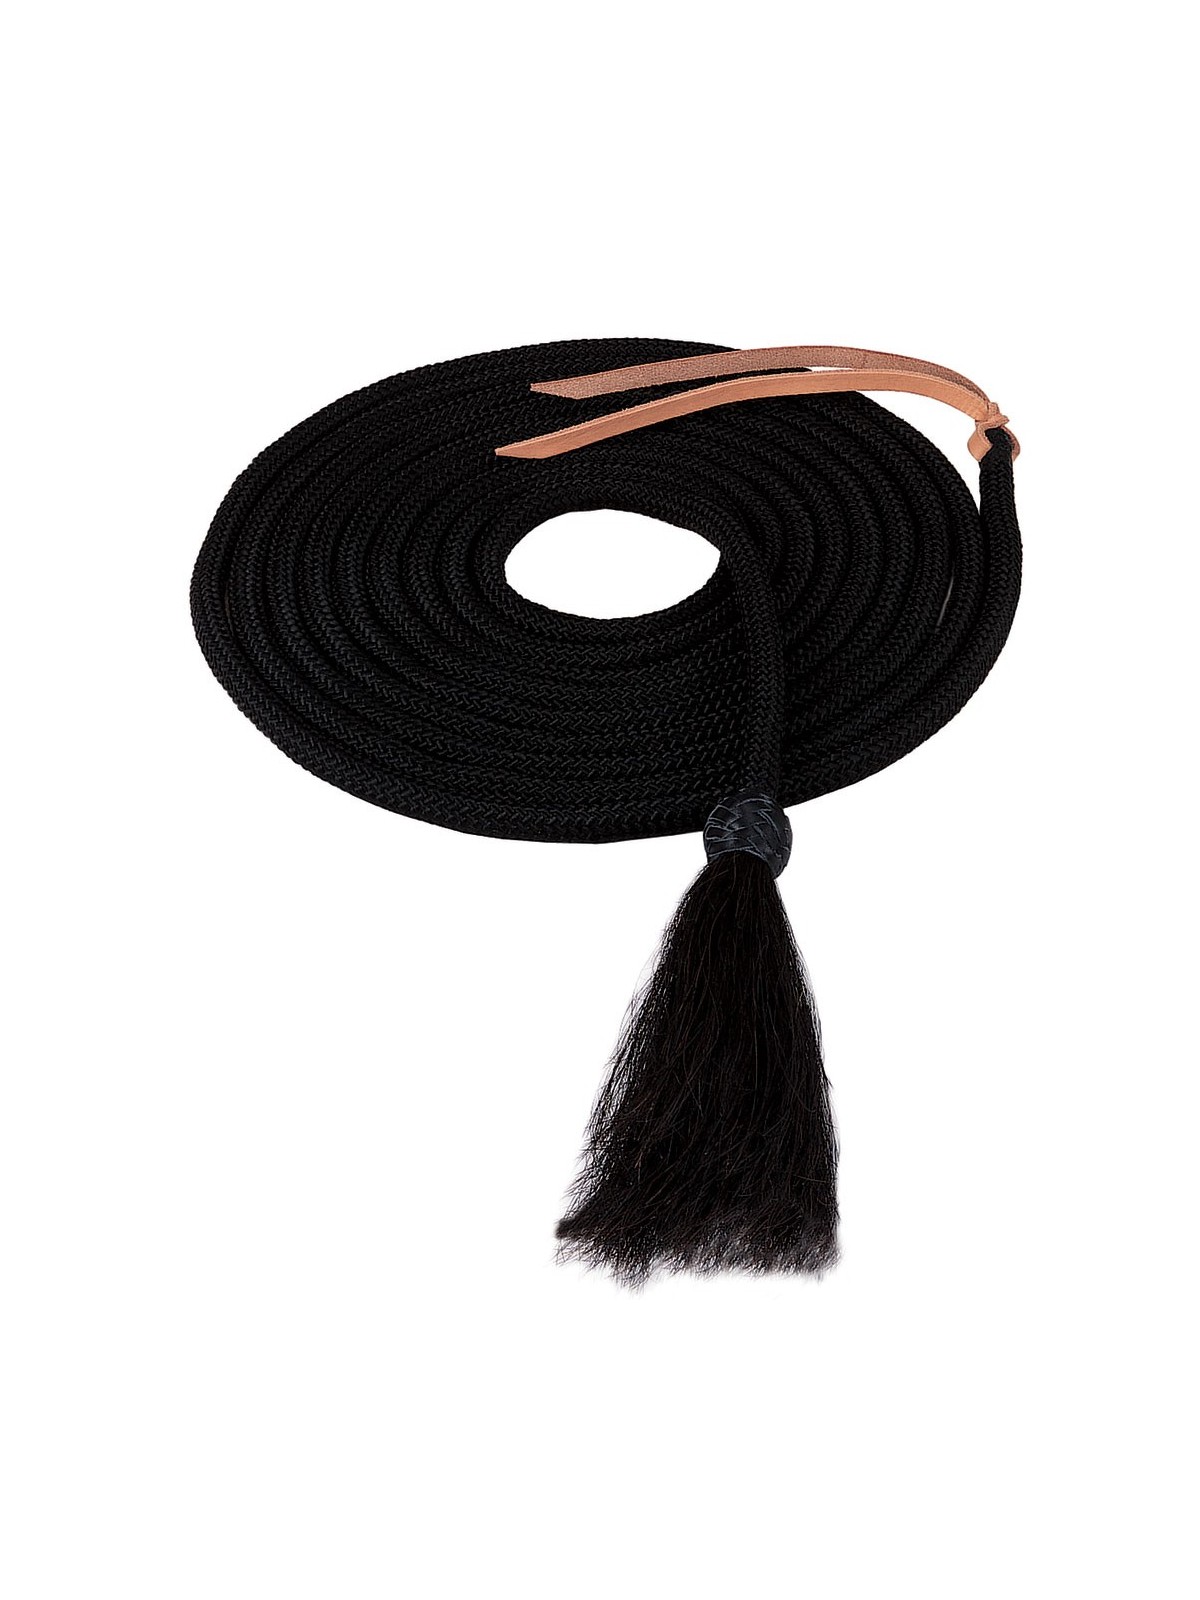 Nylon Mecate with Horsehair Tassel black